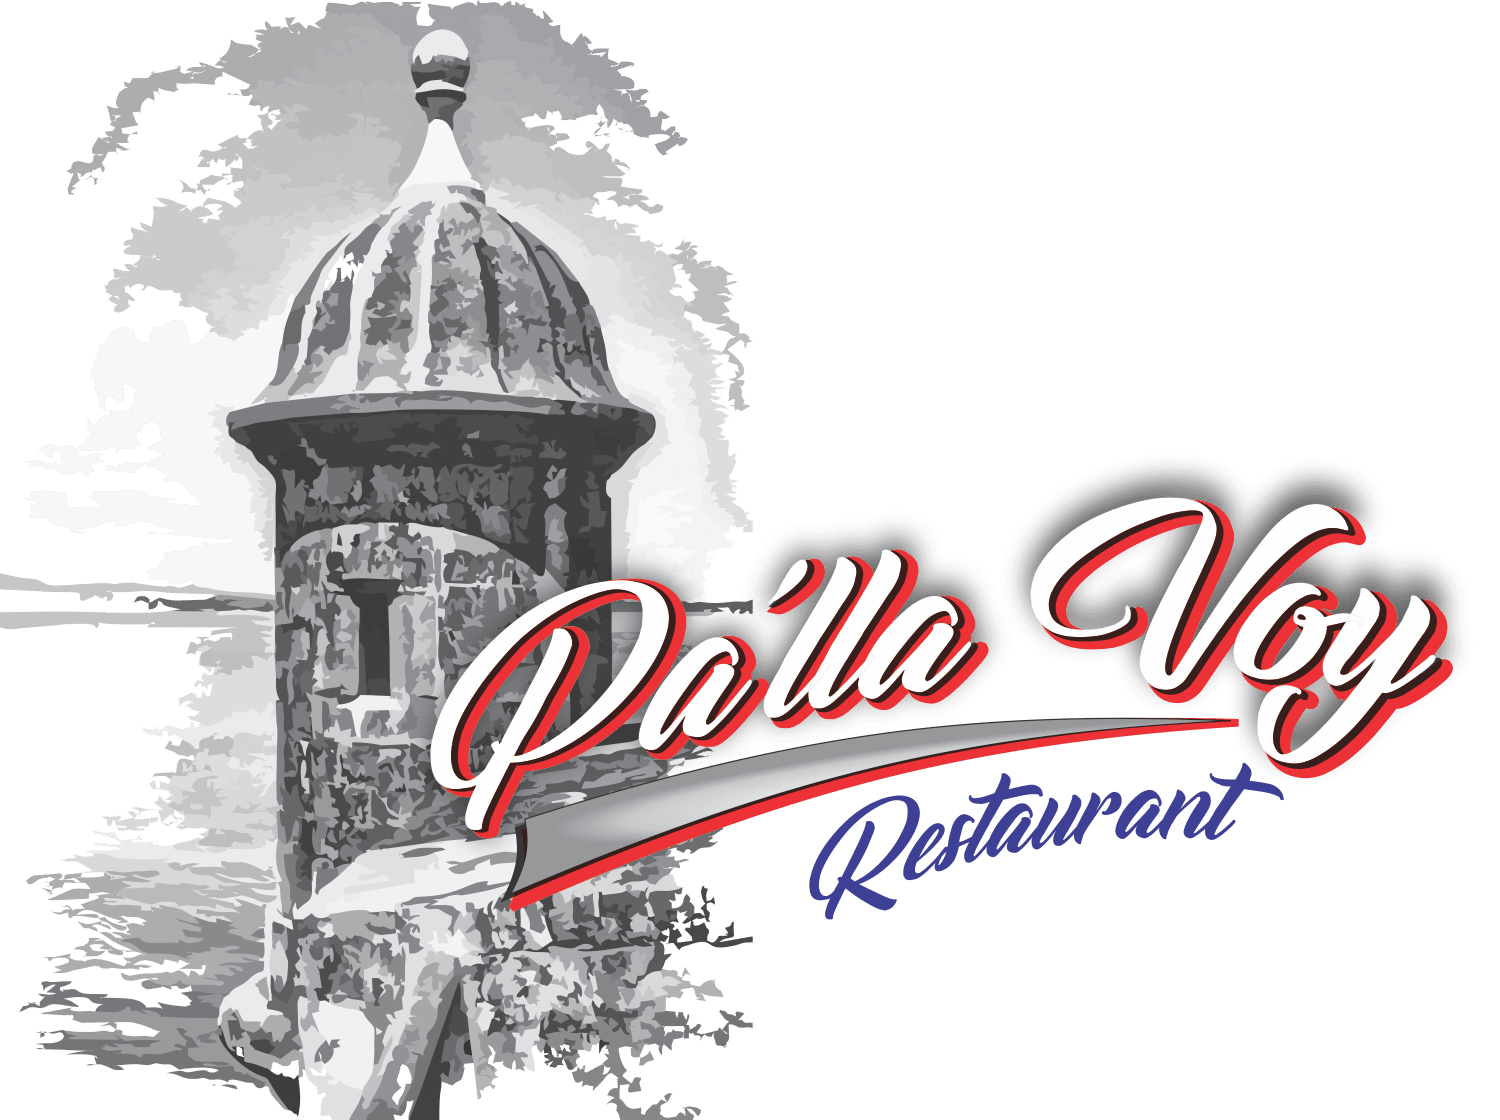 Pa'lla Voy Restaurant / Now Open